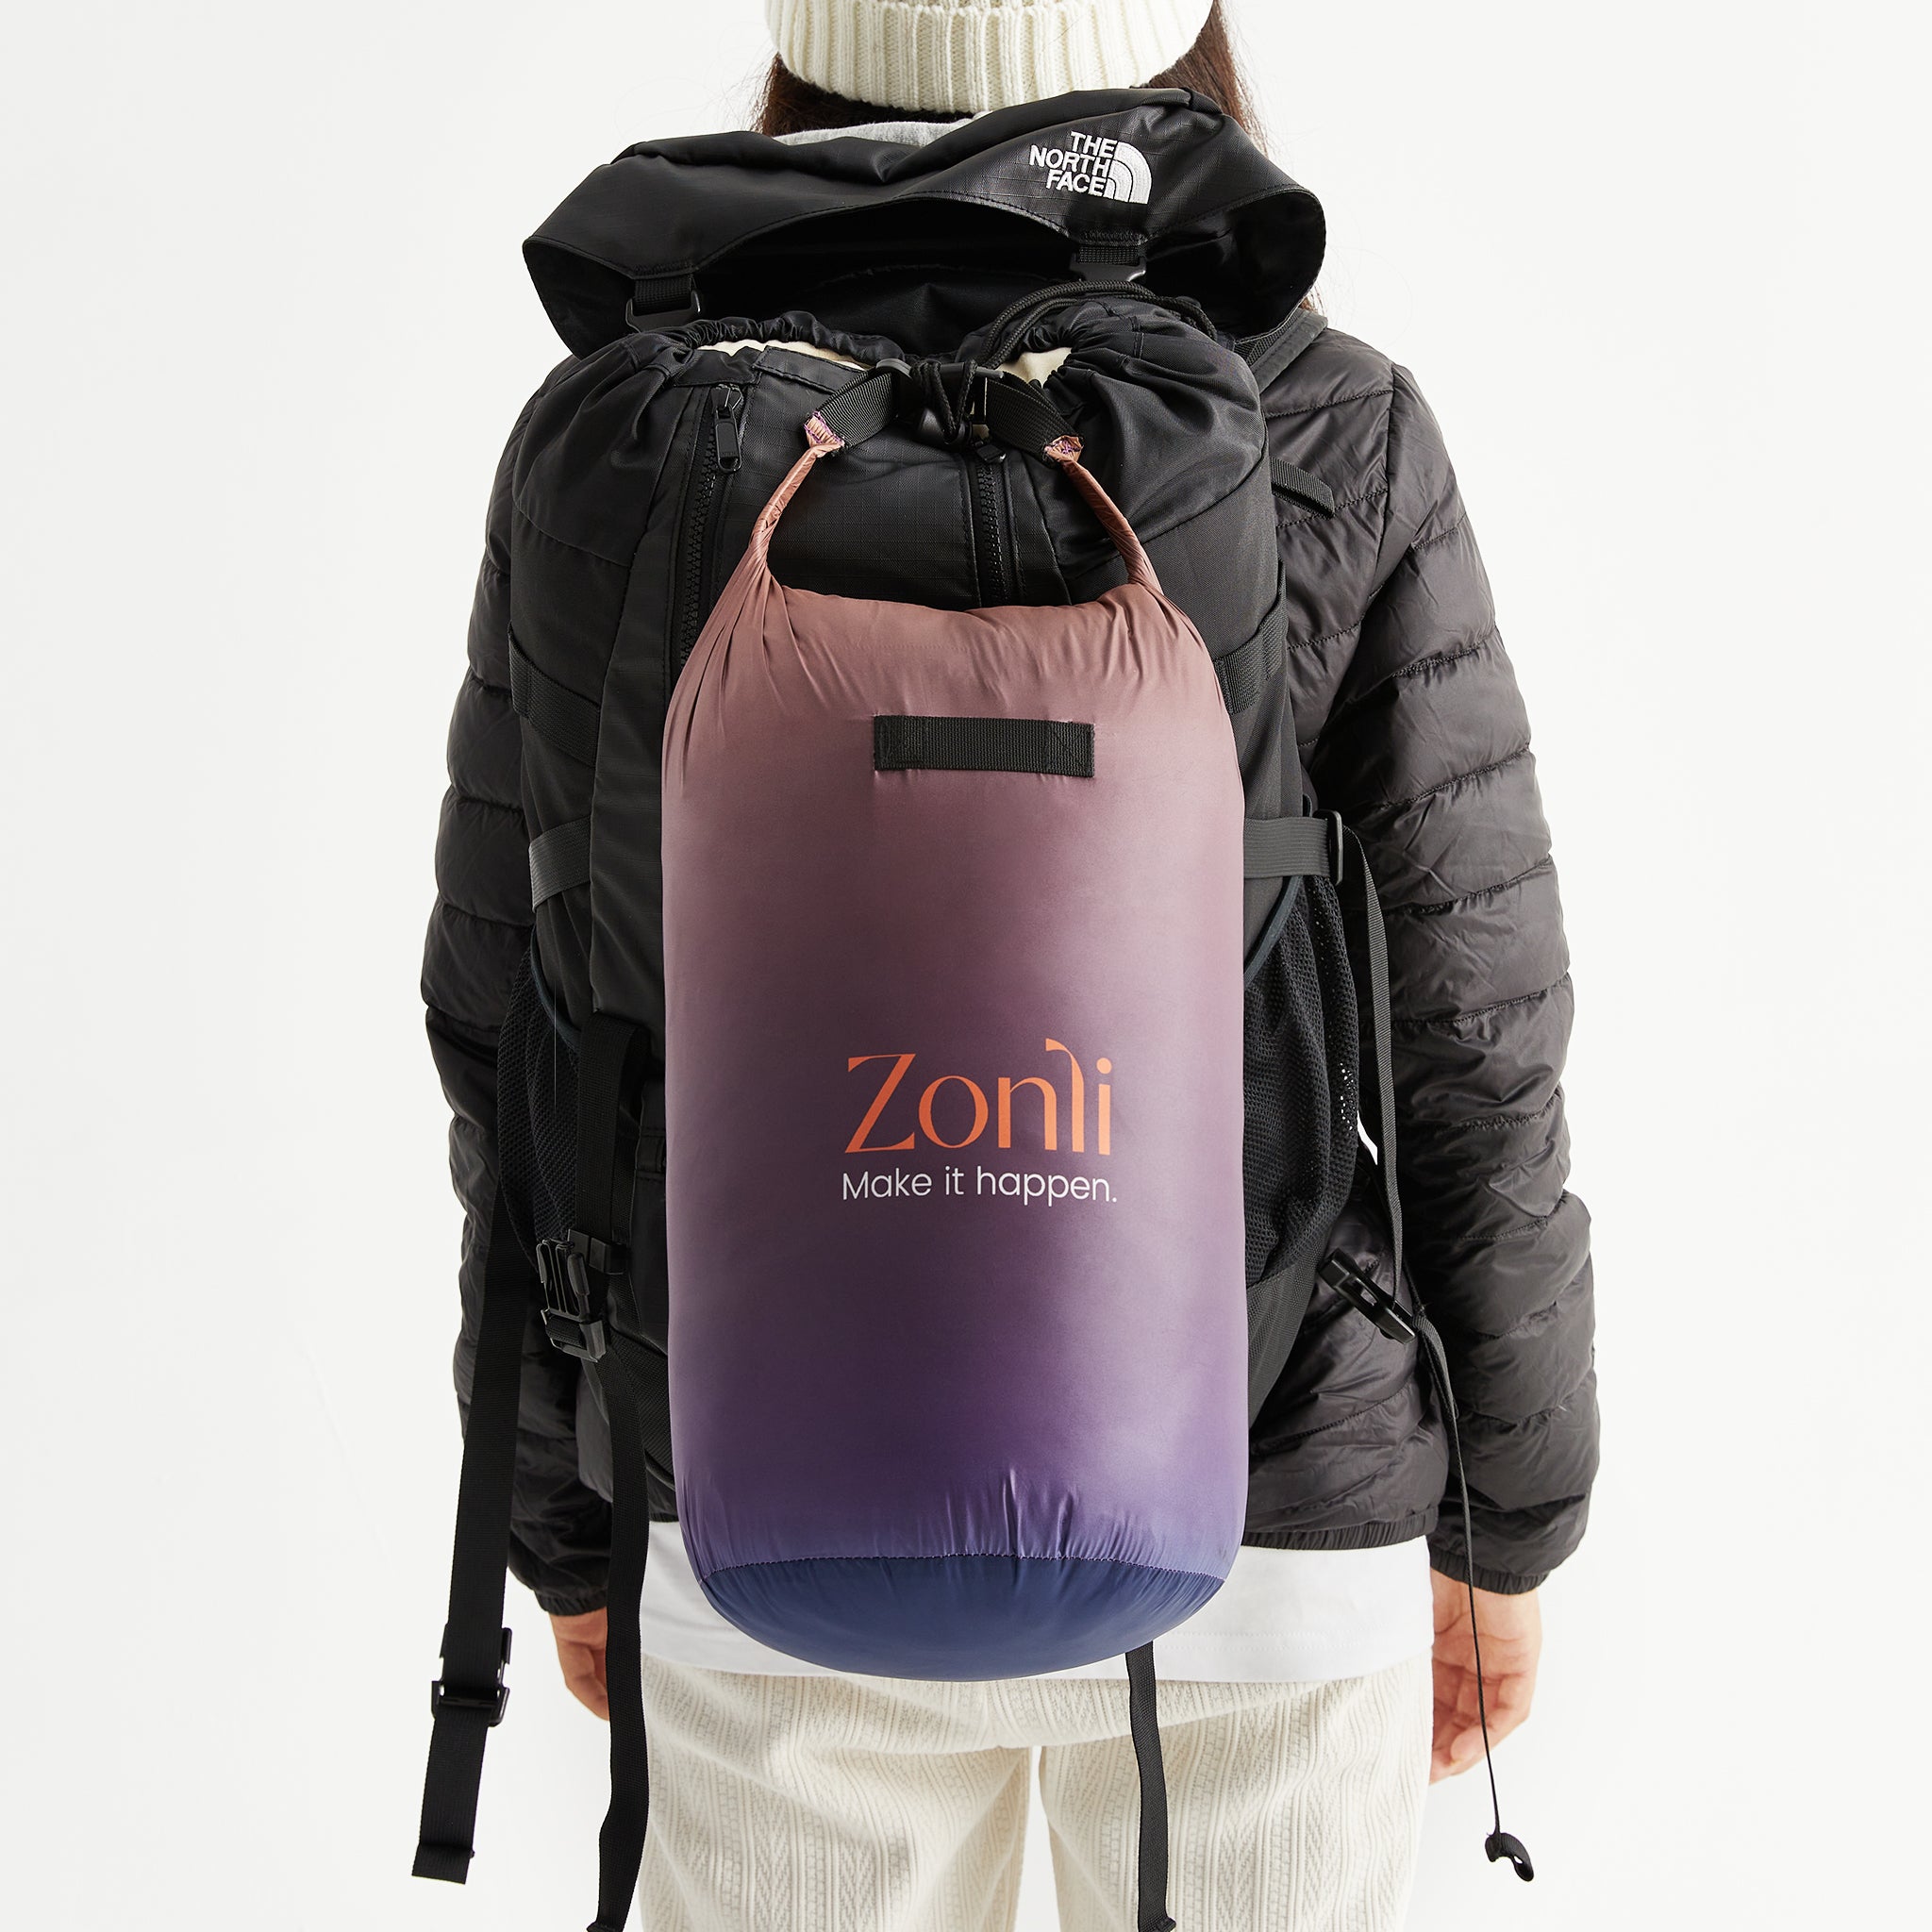 Zonli portable battery heated blanket- Outdoor